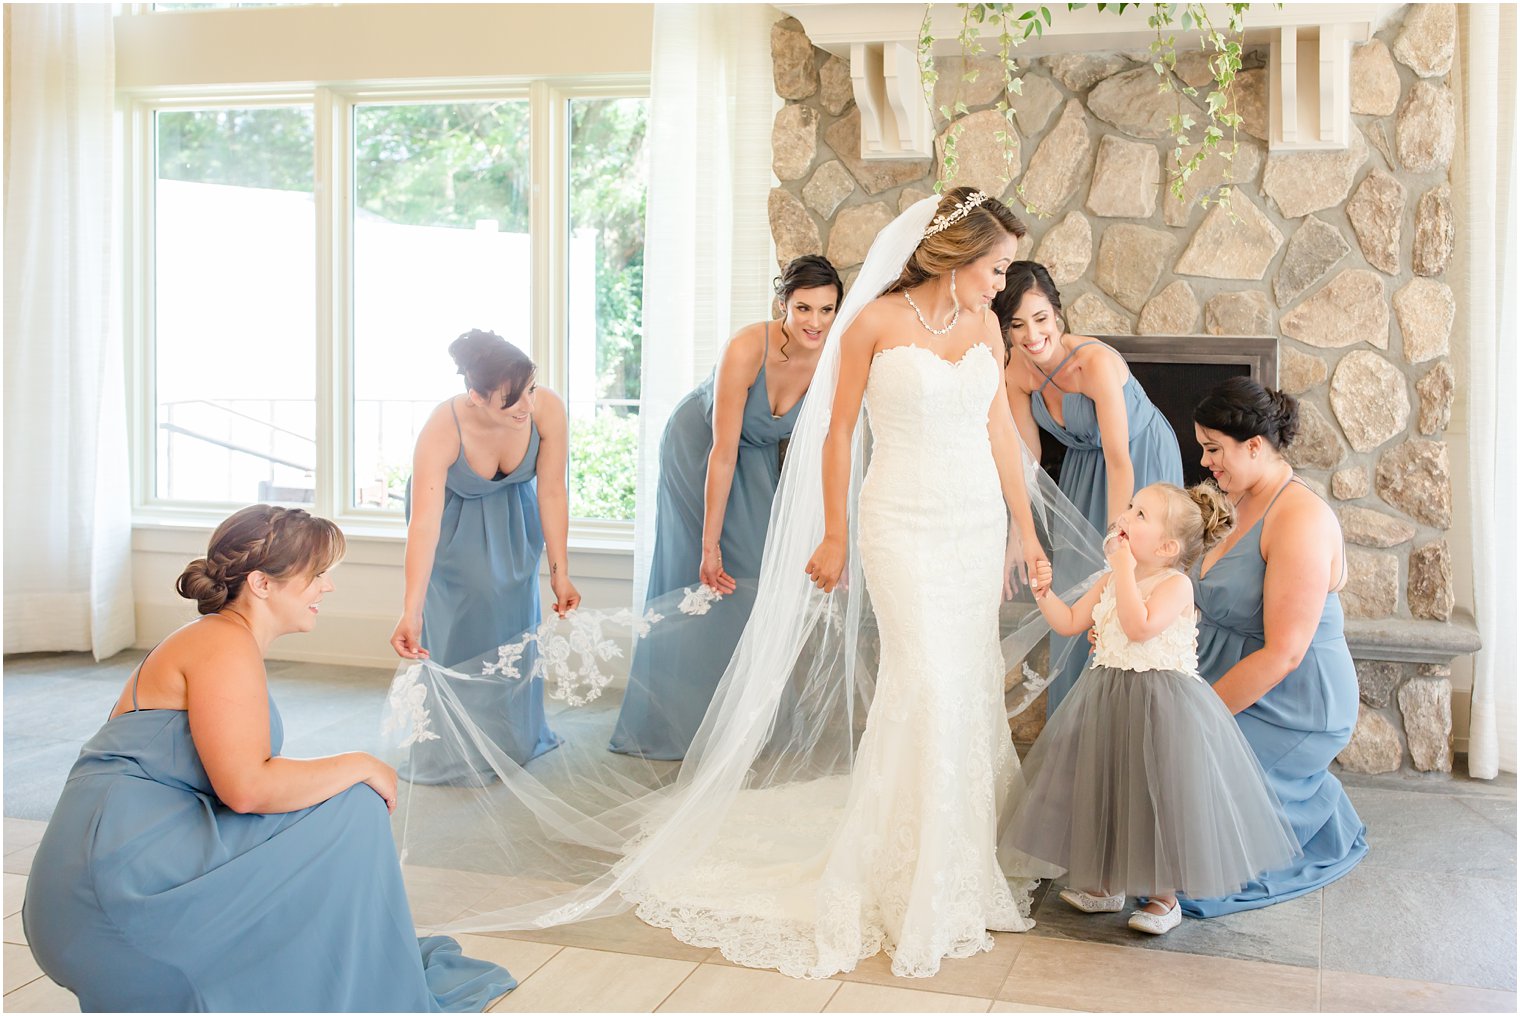 Bride and bridesmaids | Idalia Photography